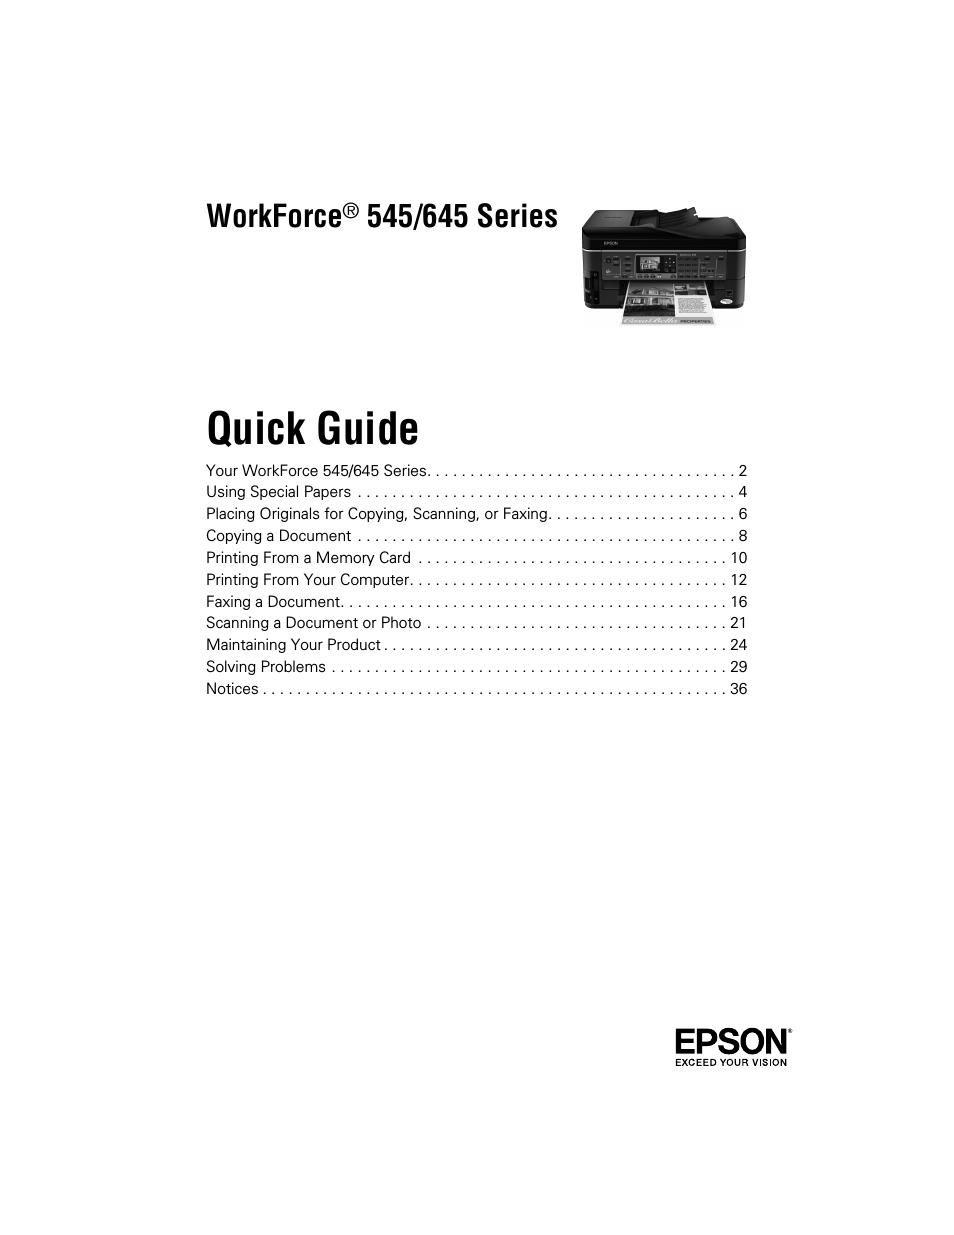 epson workforce 645 printer driver for mac